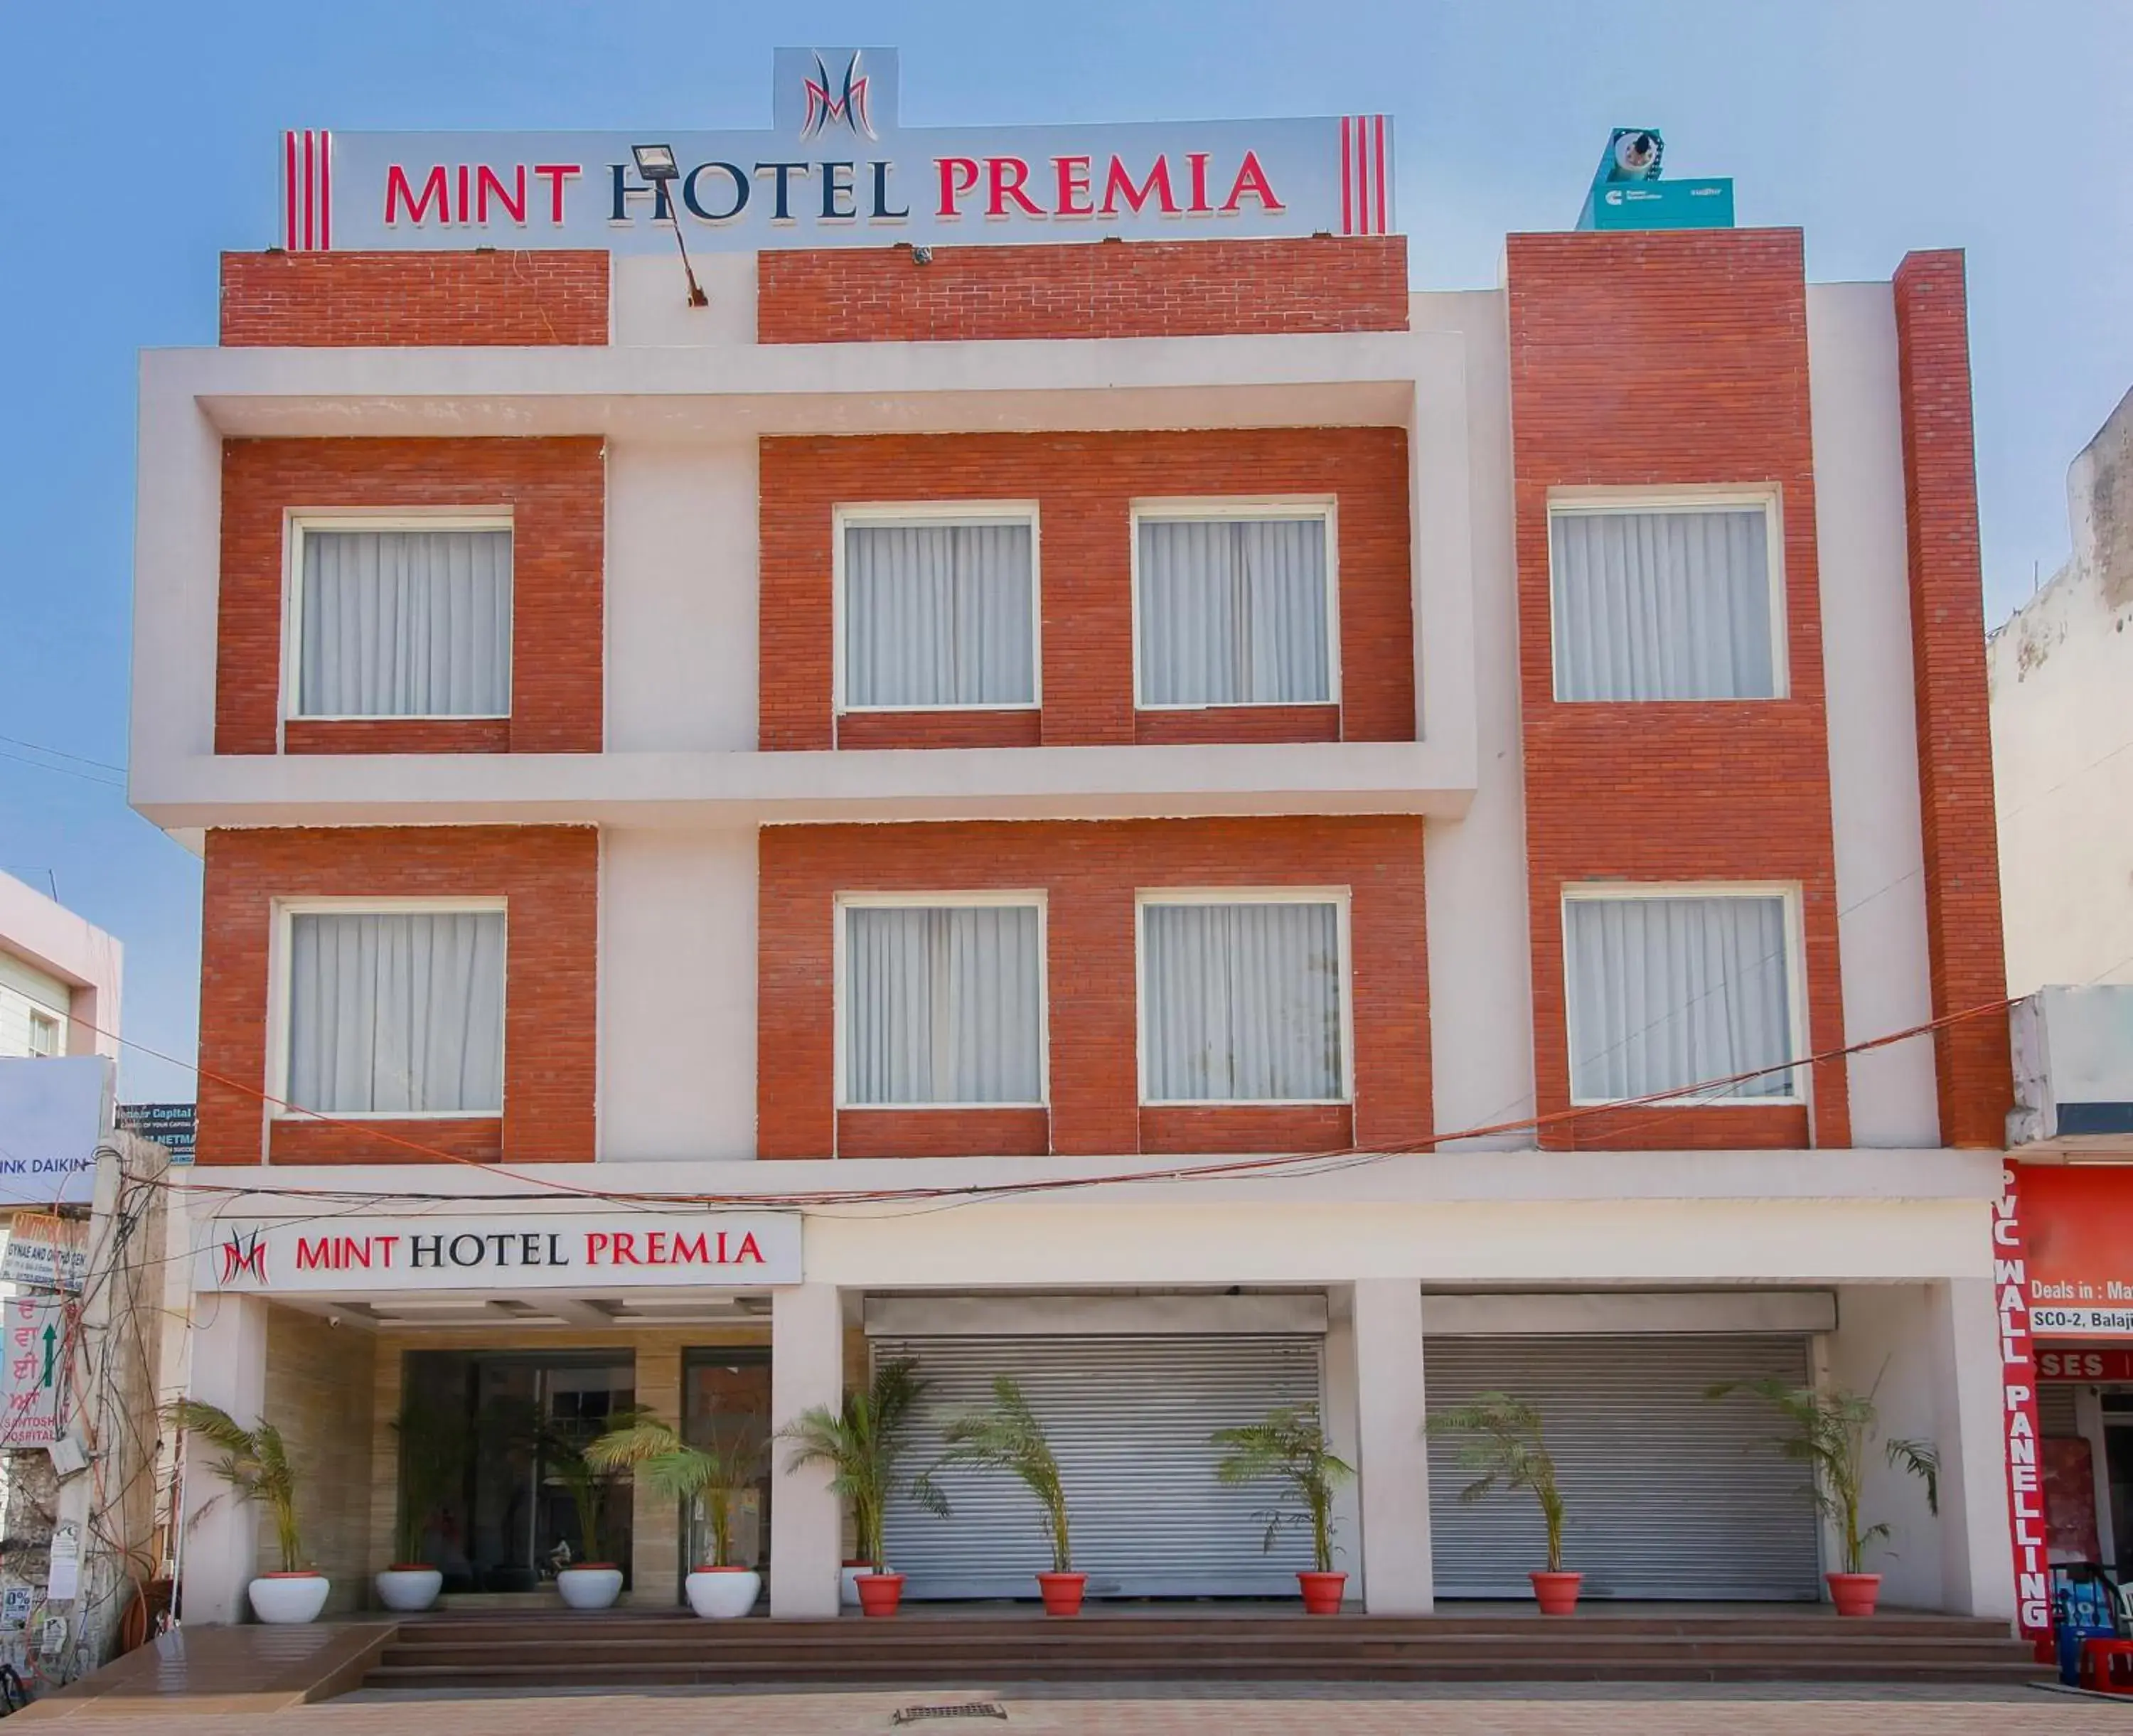 Property Building in Mint Hotel Premia Chandigarh, Zirakpur